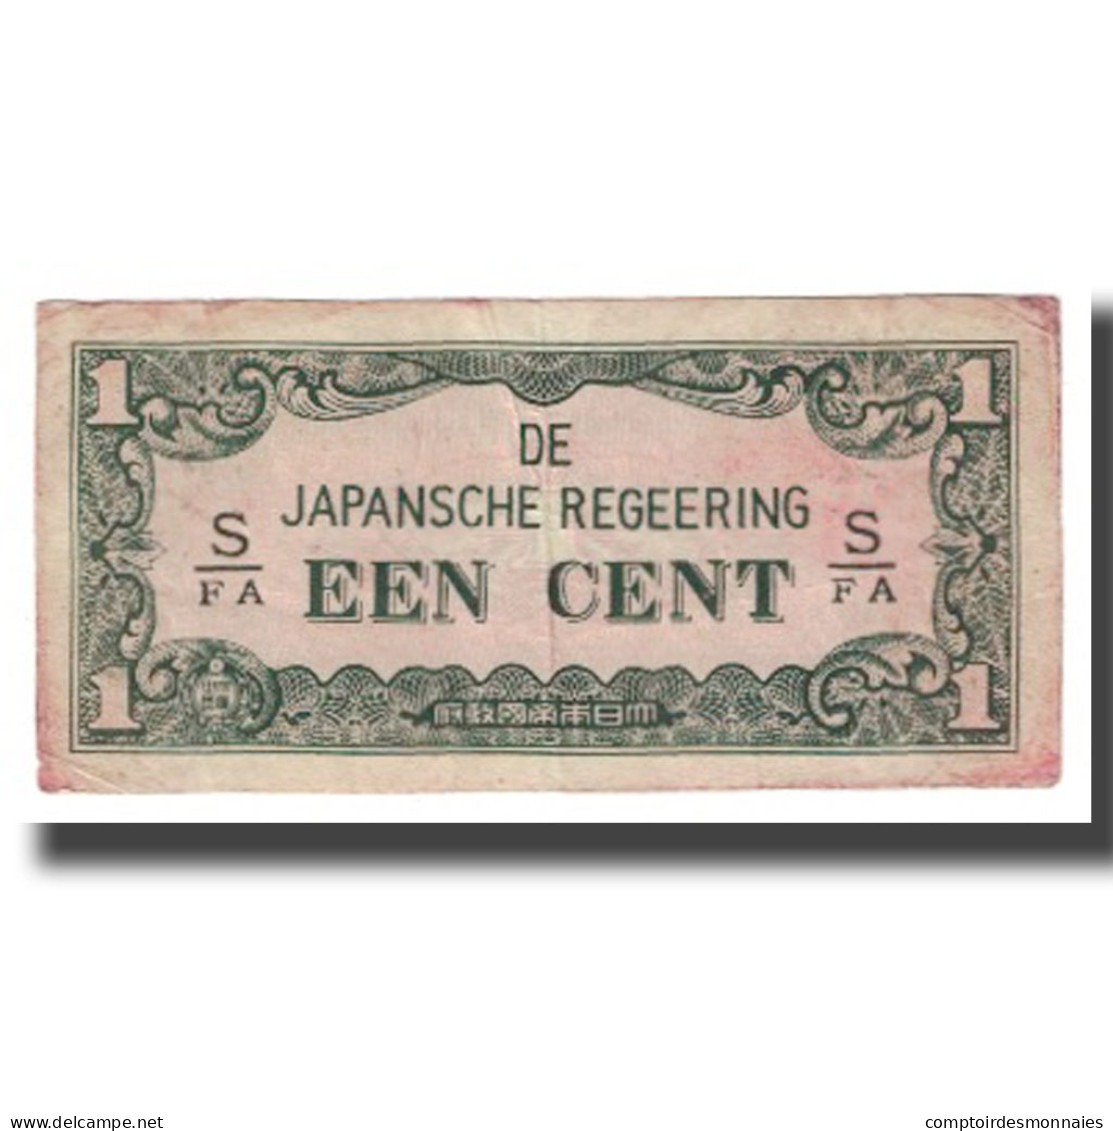 Billet, Netherlands Indies, 1 Cent, KM:119a, TB - Dutch East Indies